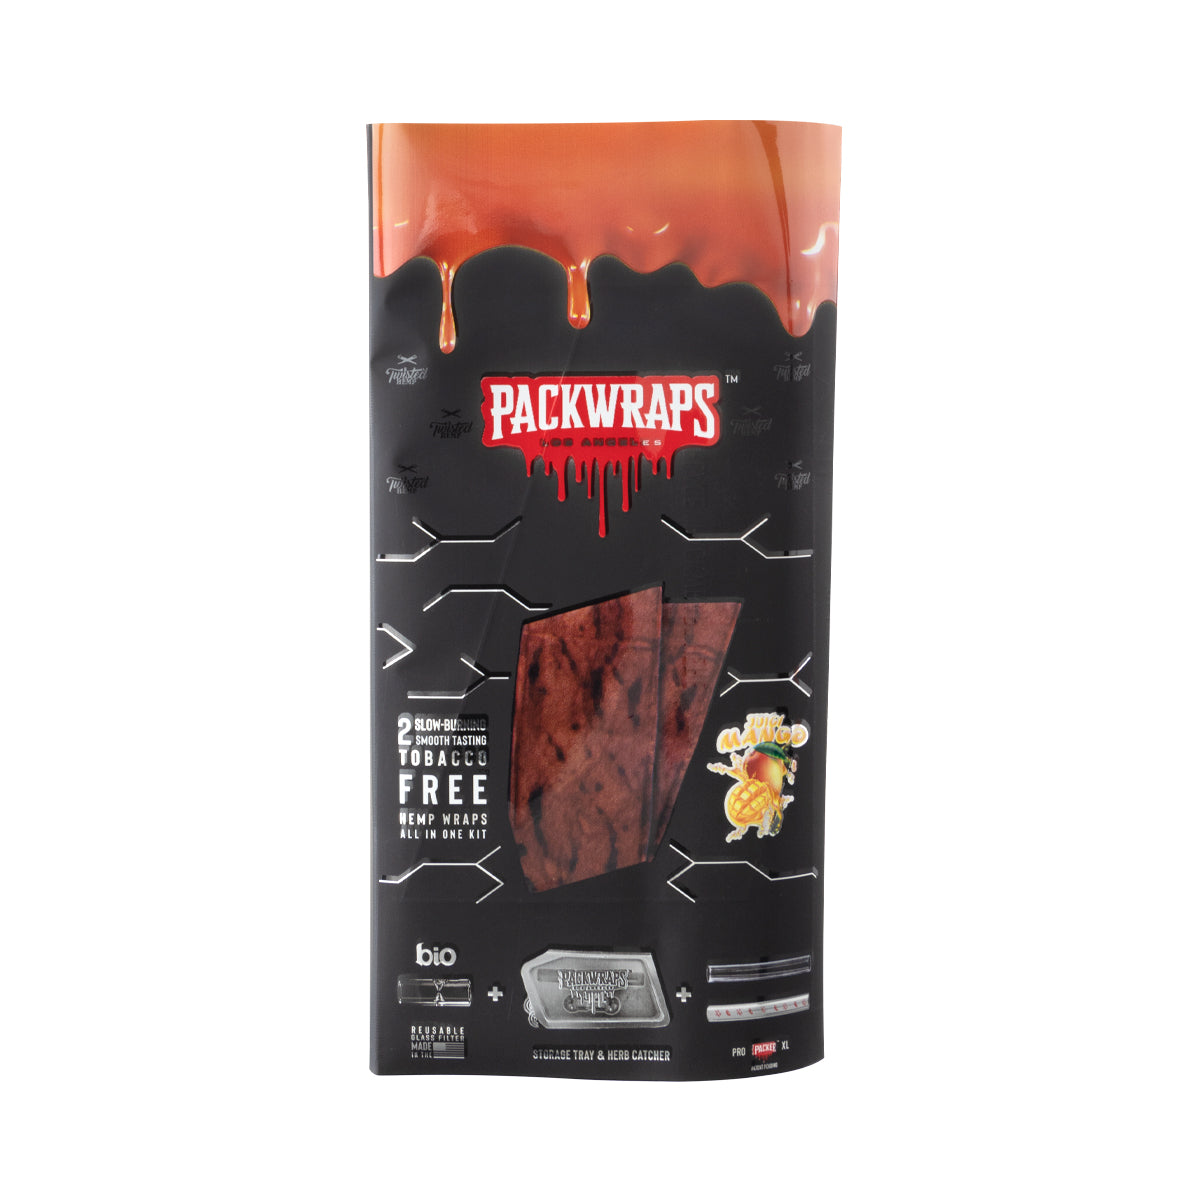 Packwraps X Twisted X Bio Wrap Kit - Juicy Mango - 10 Pack Box